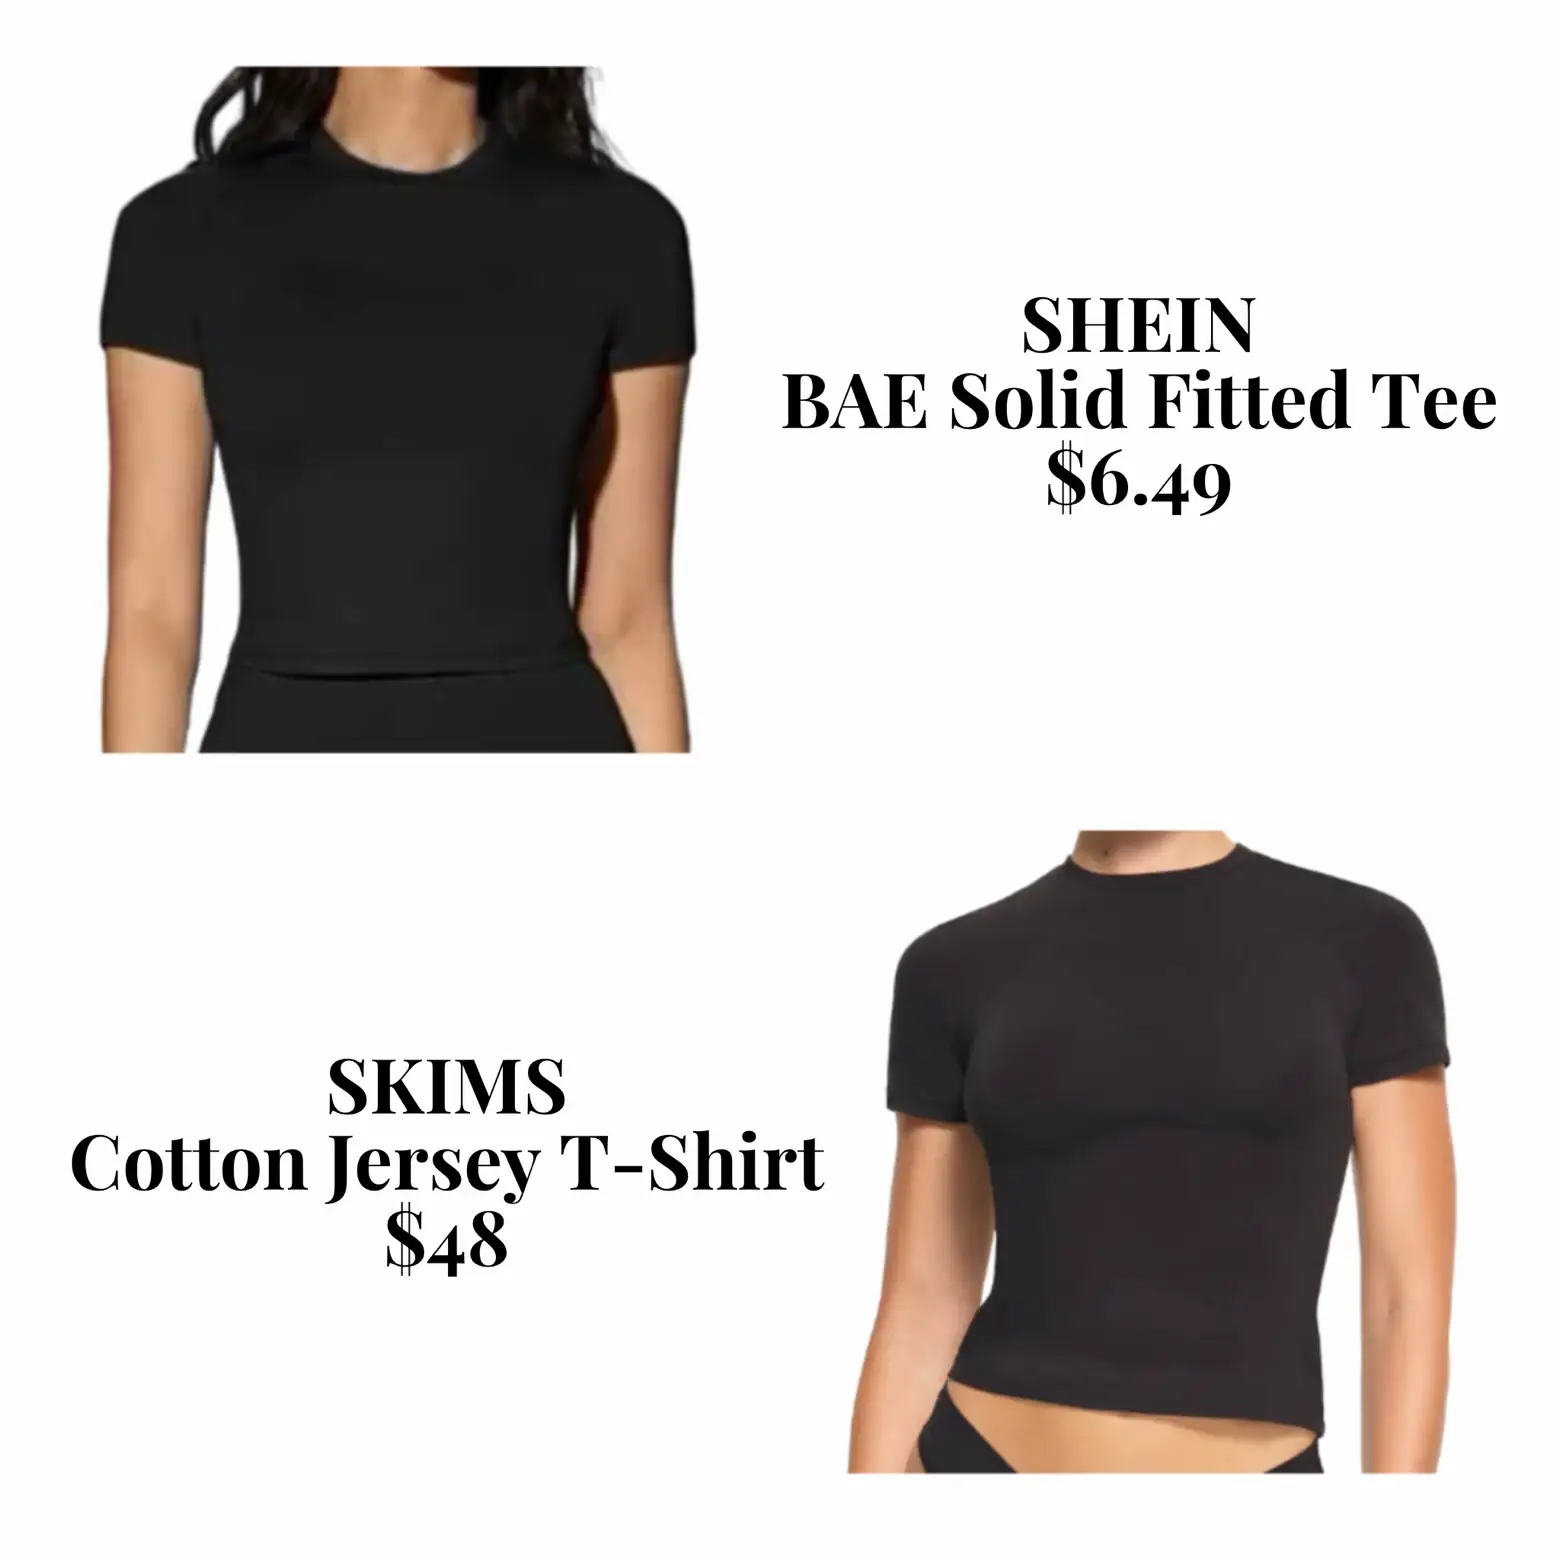 5 alternatives for the SKIMS Fits Everybody T-Shirt